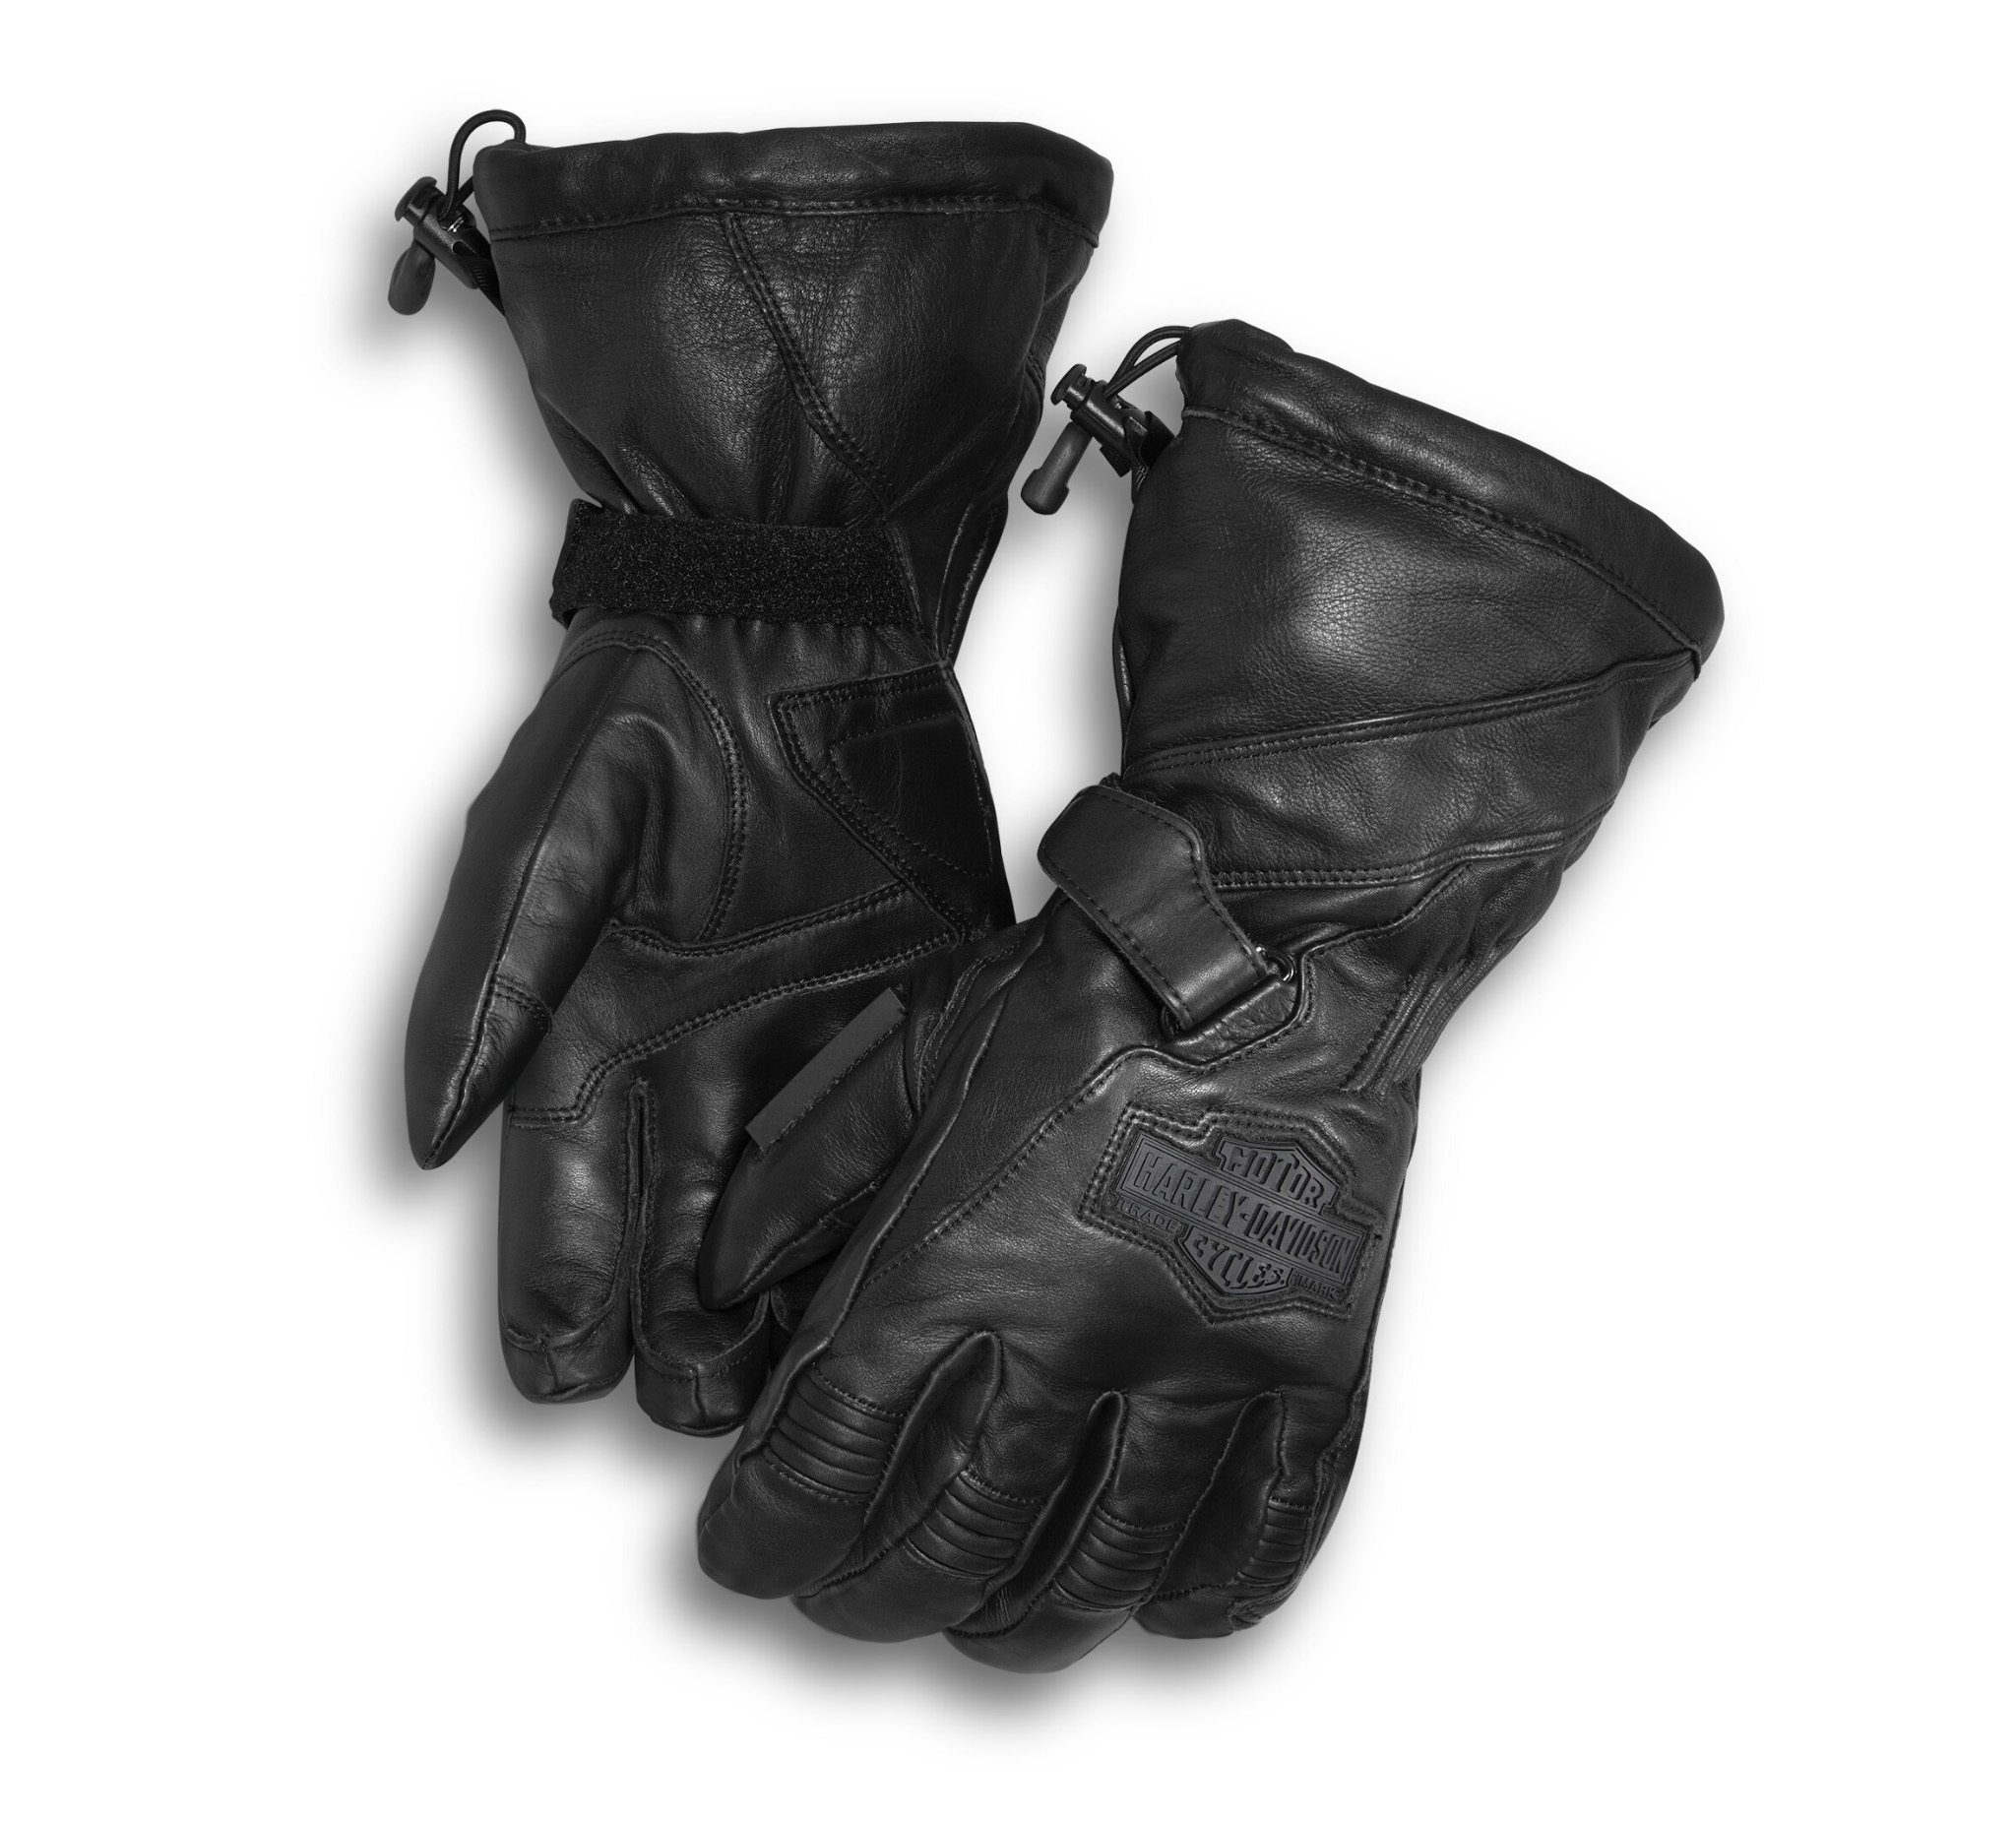 Details about   Men's Waterproof Gauntlet Glove w/ Flex Knuckle & Reflective Trim Touch Screen